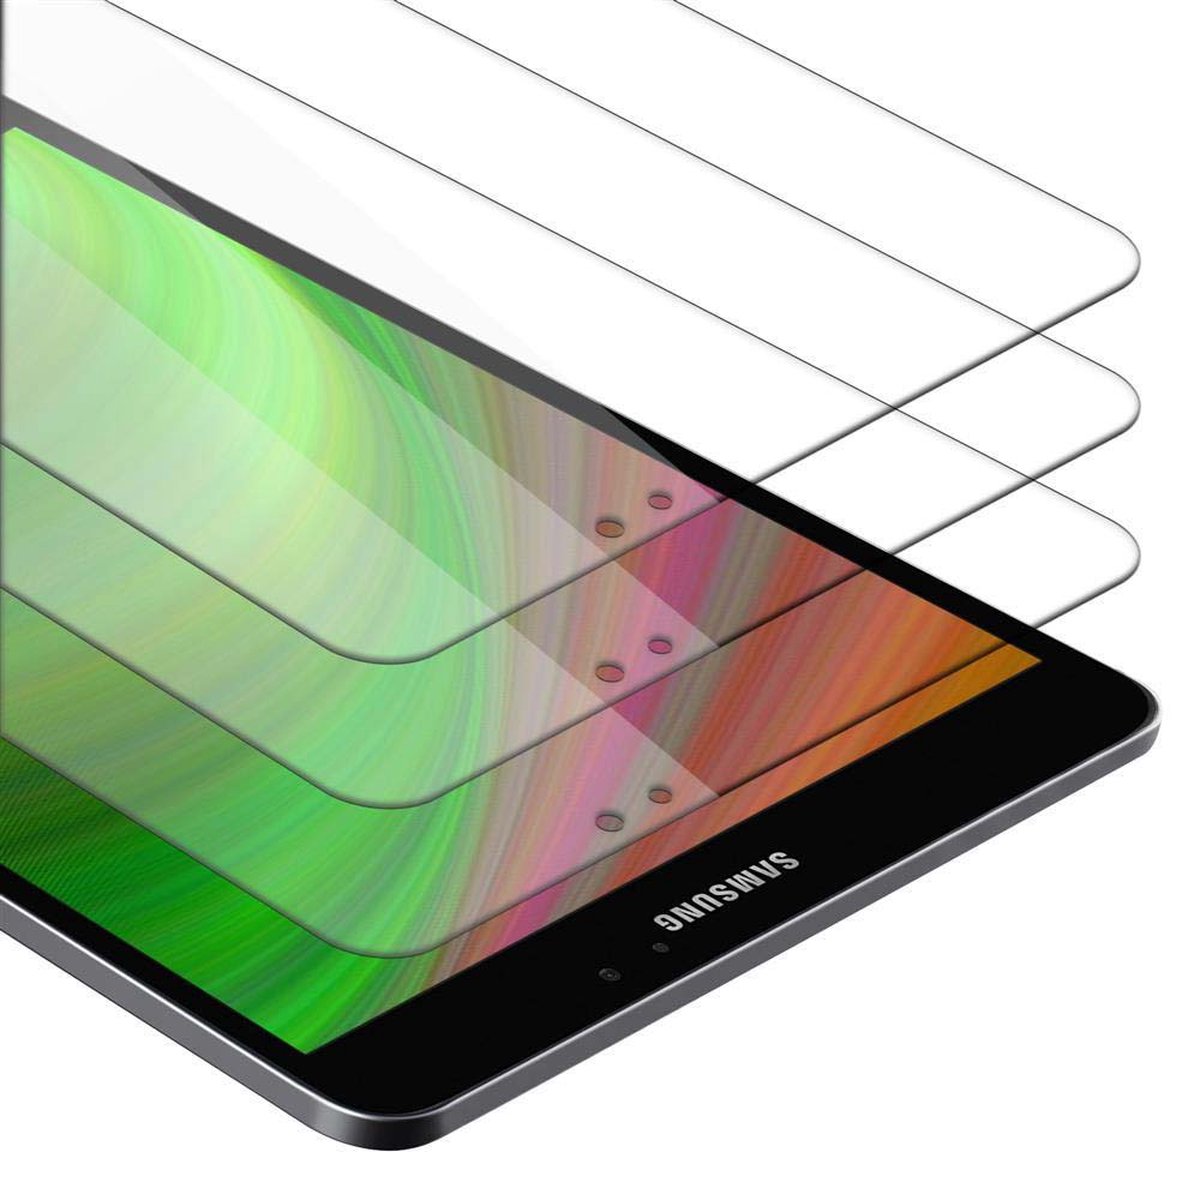 Cadorabo 3x Screenprotector voor Samsung Galaxy Tab S2 (8 inch) in KRISTALHELDER - Getemperd Pantser Film (Tempered) Display beschermend glas in 9H hardheid met 3D Touch